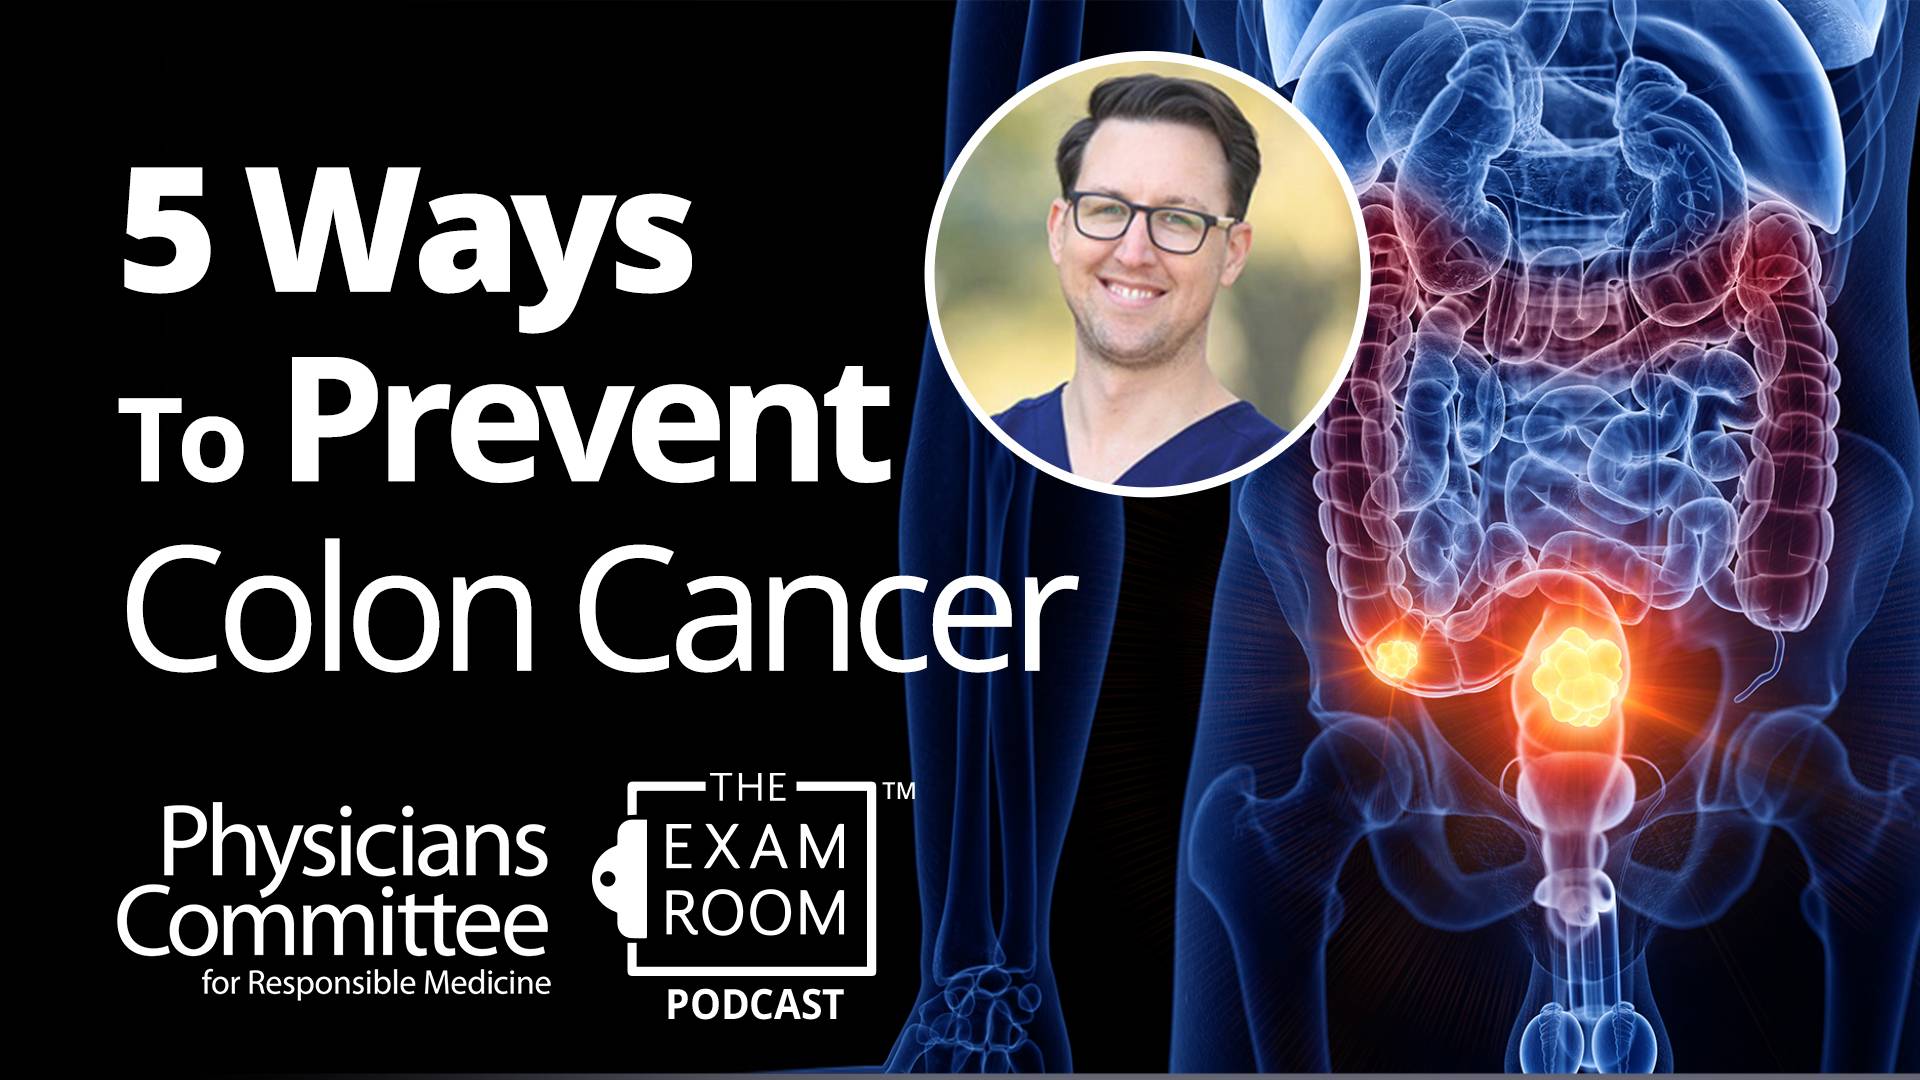 5 Ways to Prevent Colon Cancer